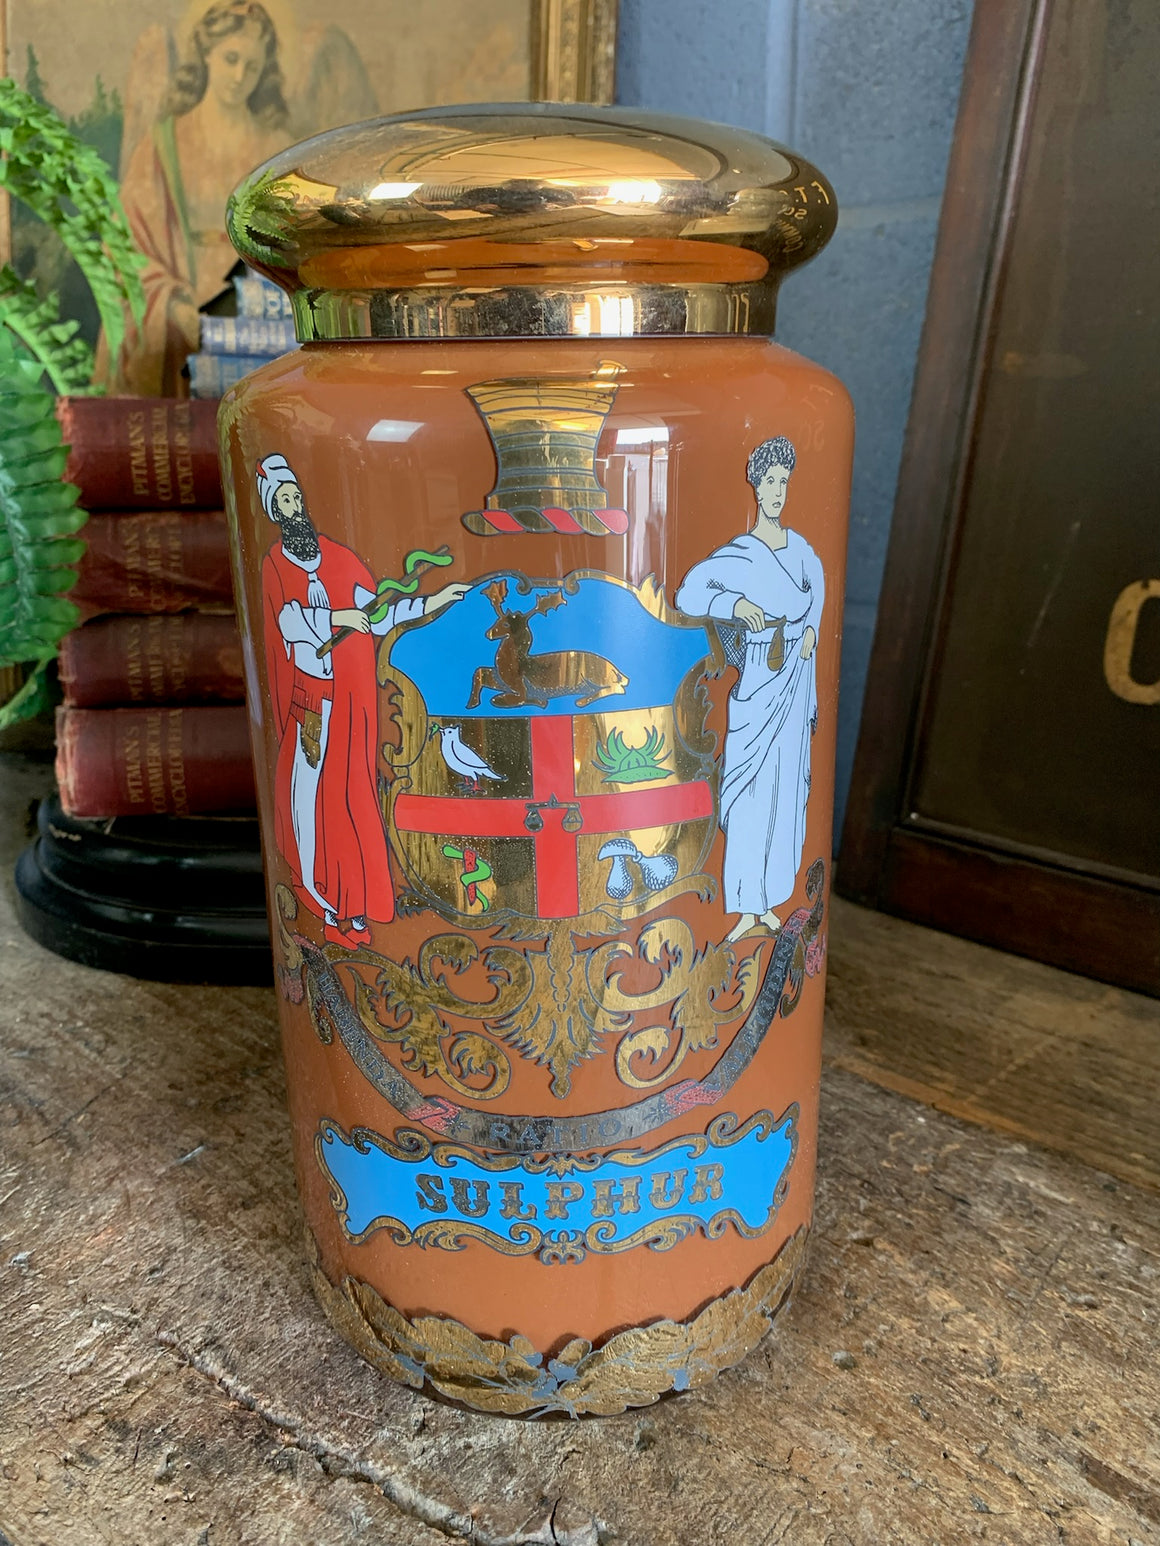 A large Royal Pharmaceutical Society apothecary jar - Sulphur